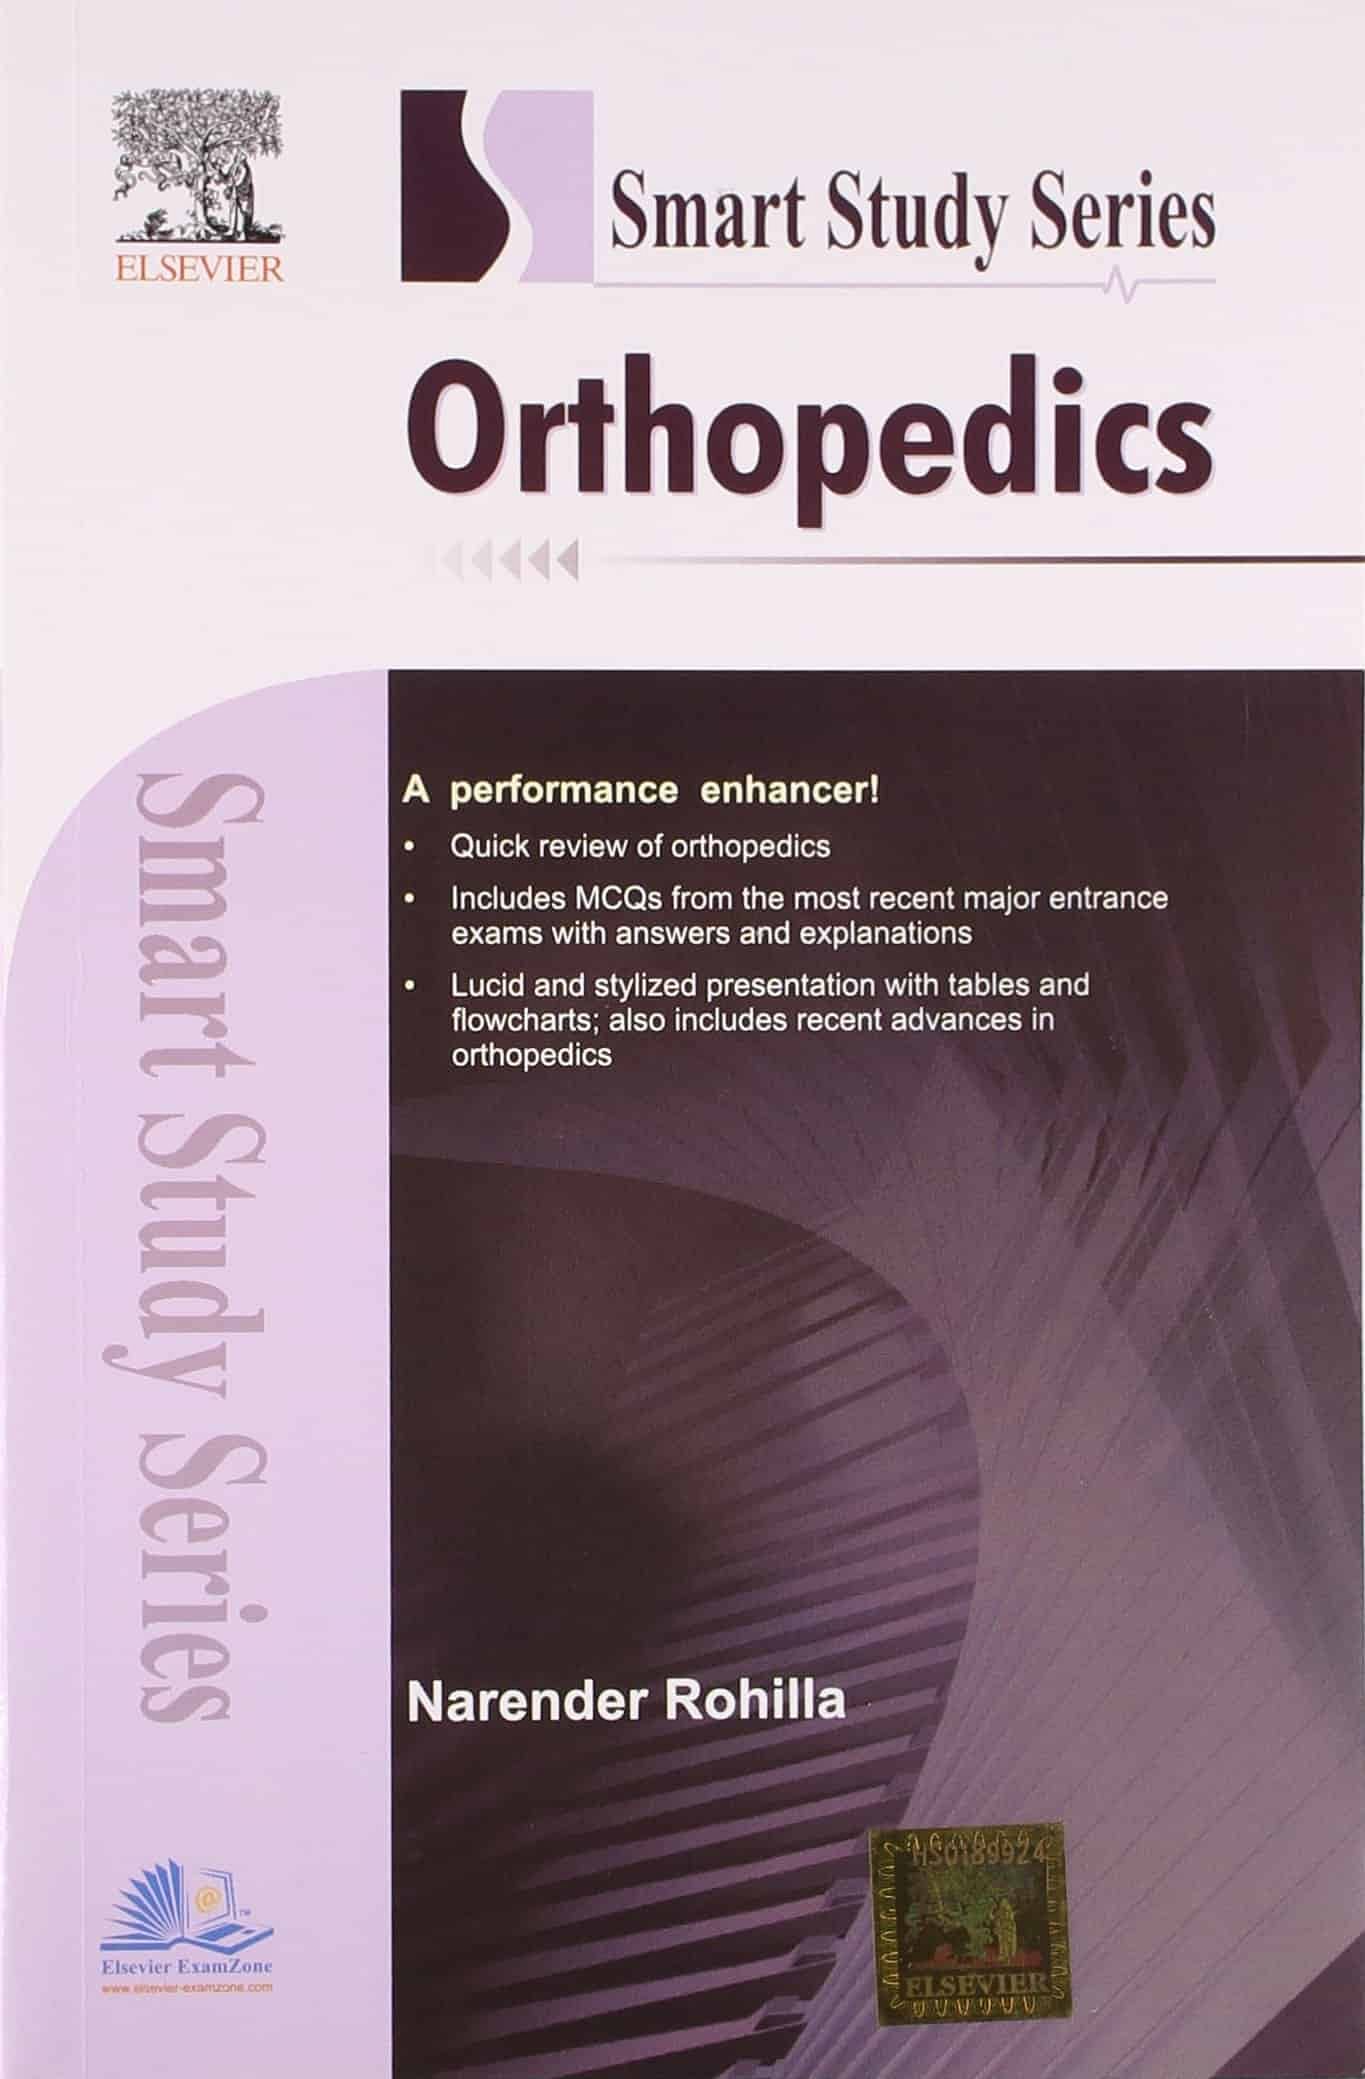 Smart Study Series: Orthopaedics by Narender Rohilla